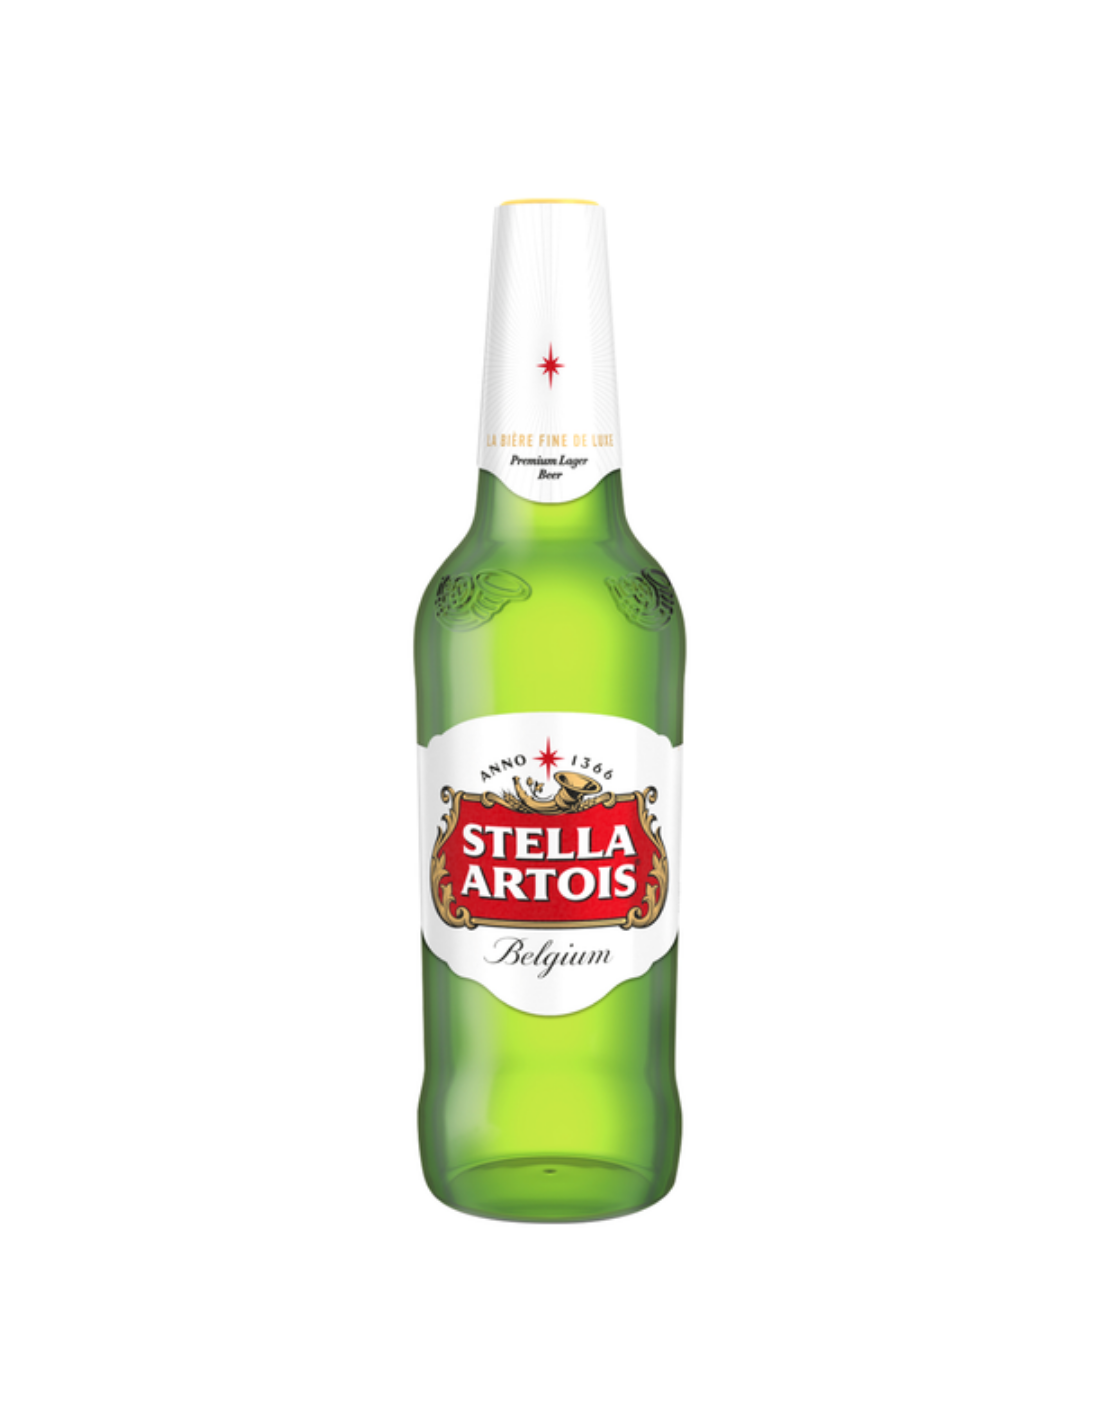 Bere blonda Stella Artois, 5% alc., 0.66L, Romania alcooldiscount.ro